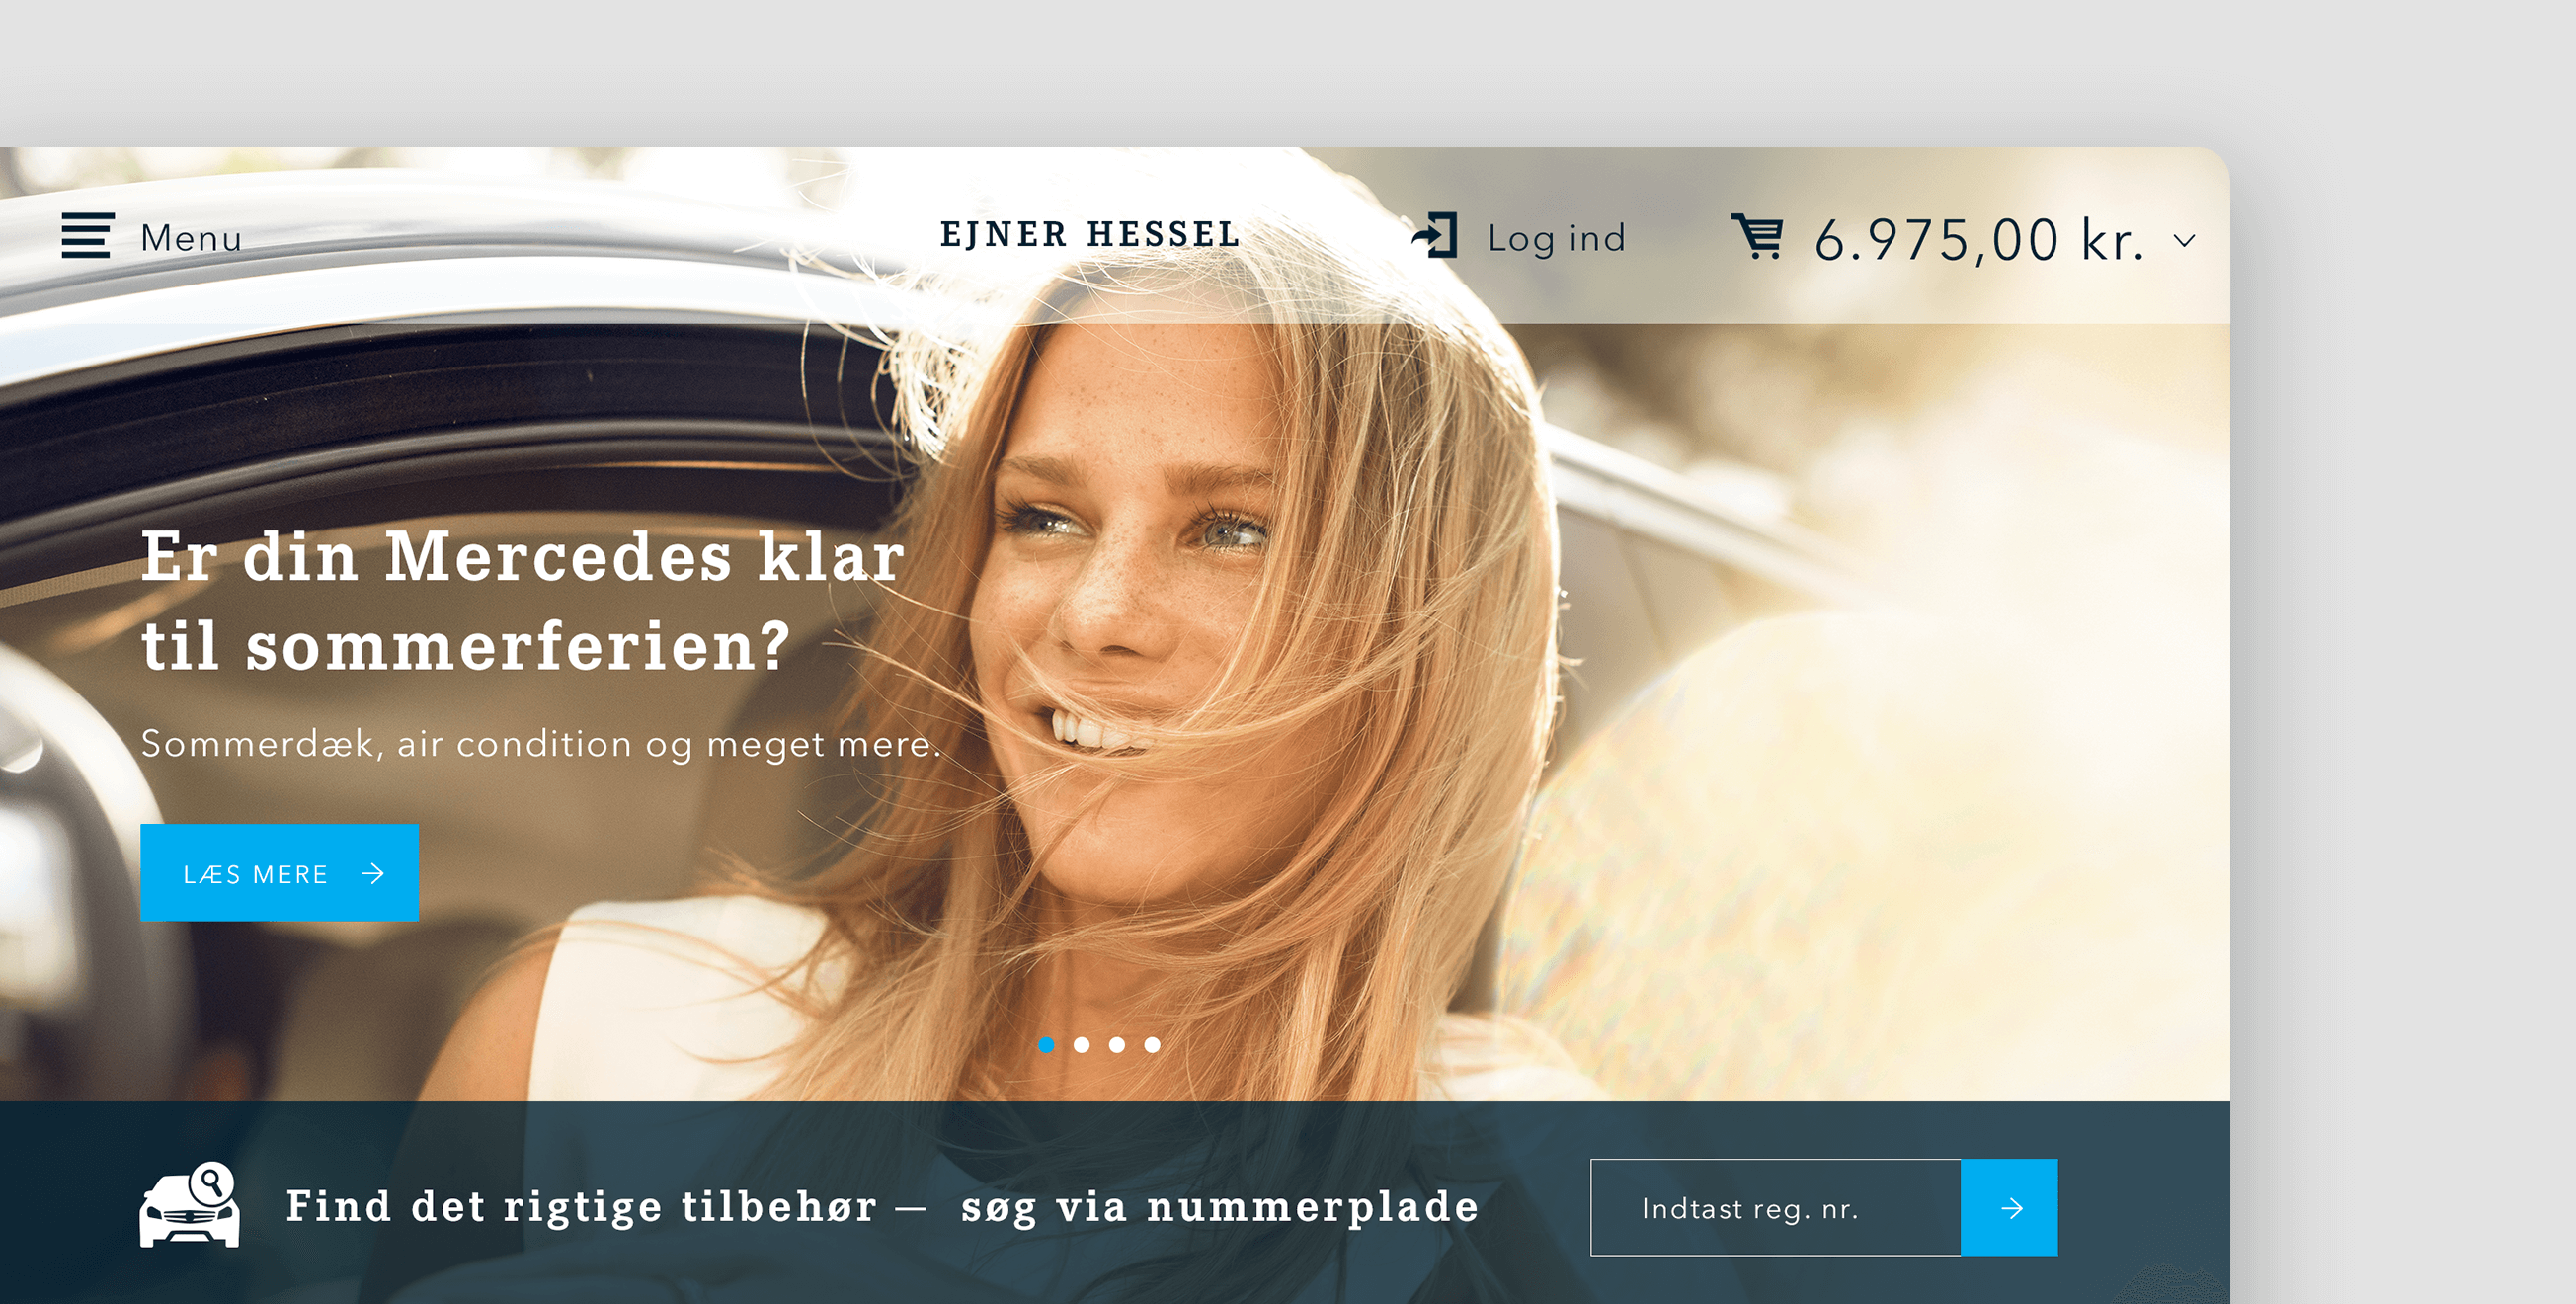 Ejner Hessel — Visual identity, art direction and UX/UI ecommerce design.